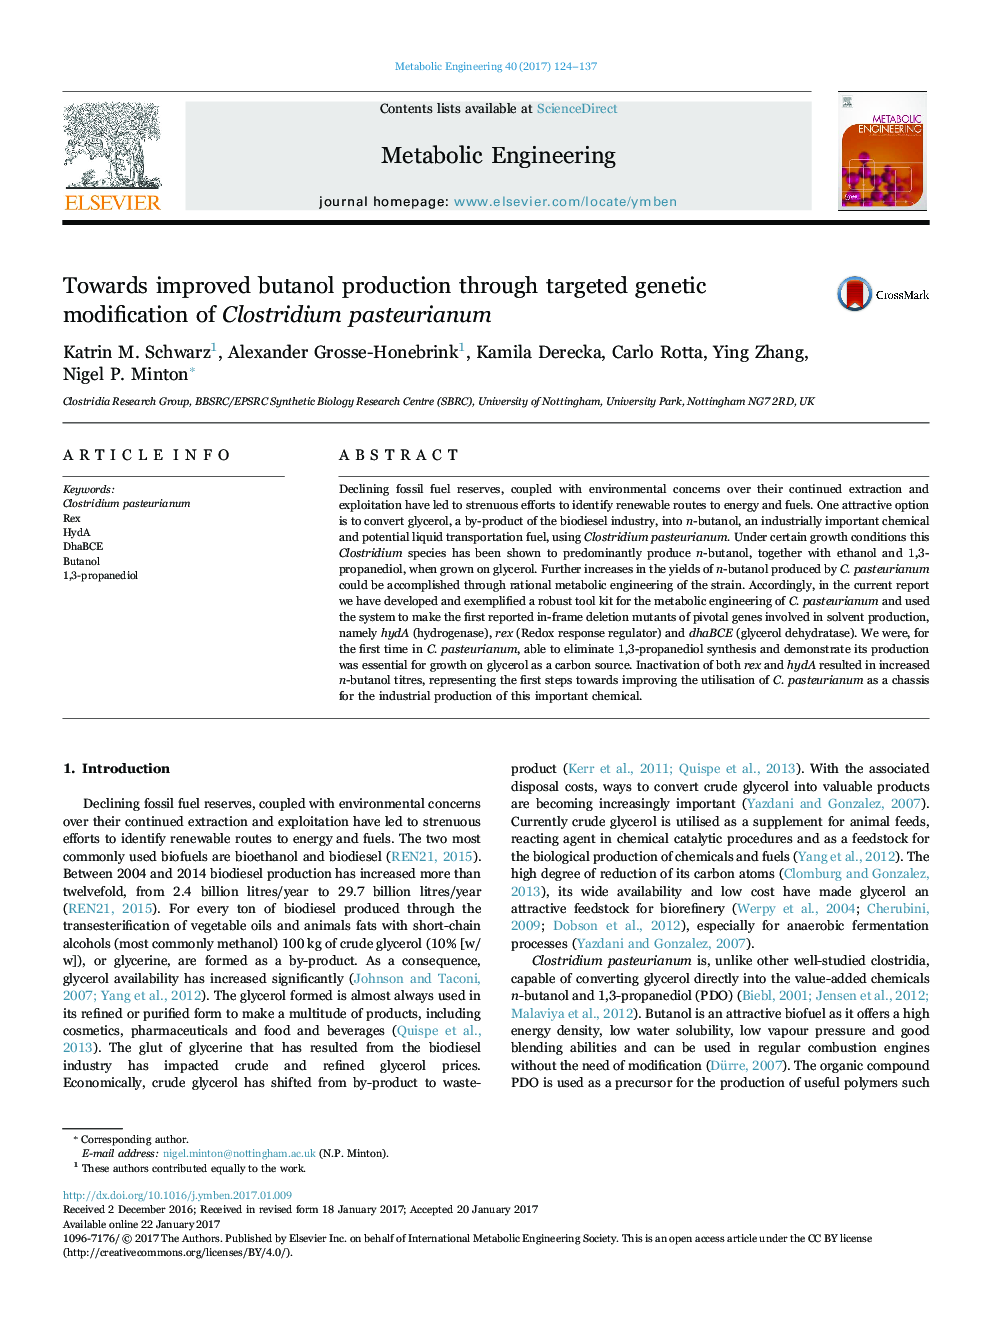 Towards improved butanol production through targeted genetic modification of Clostridium pasteurianum